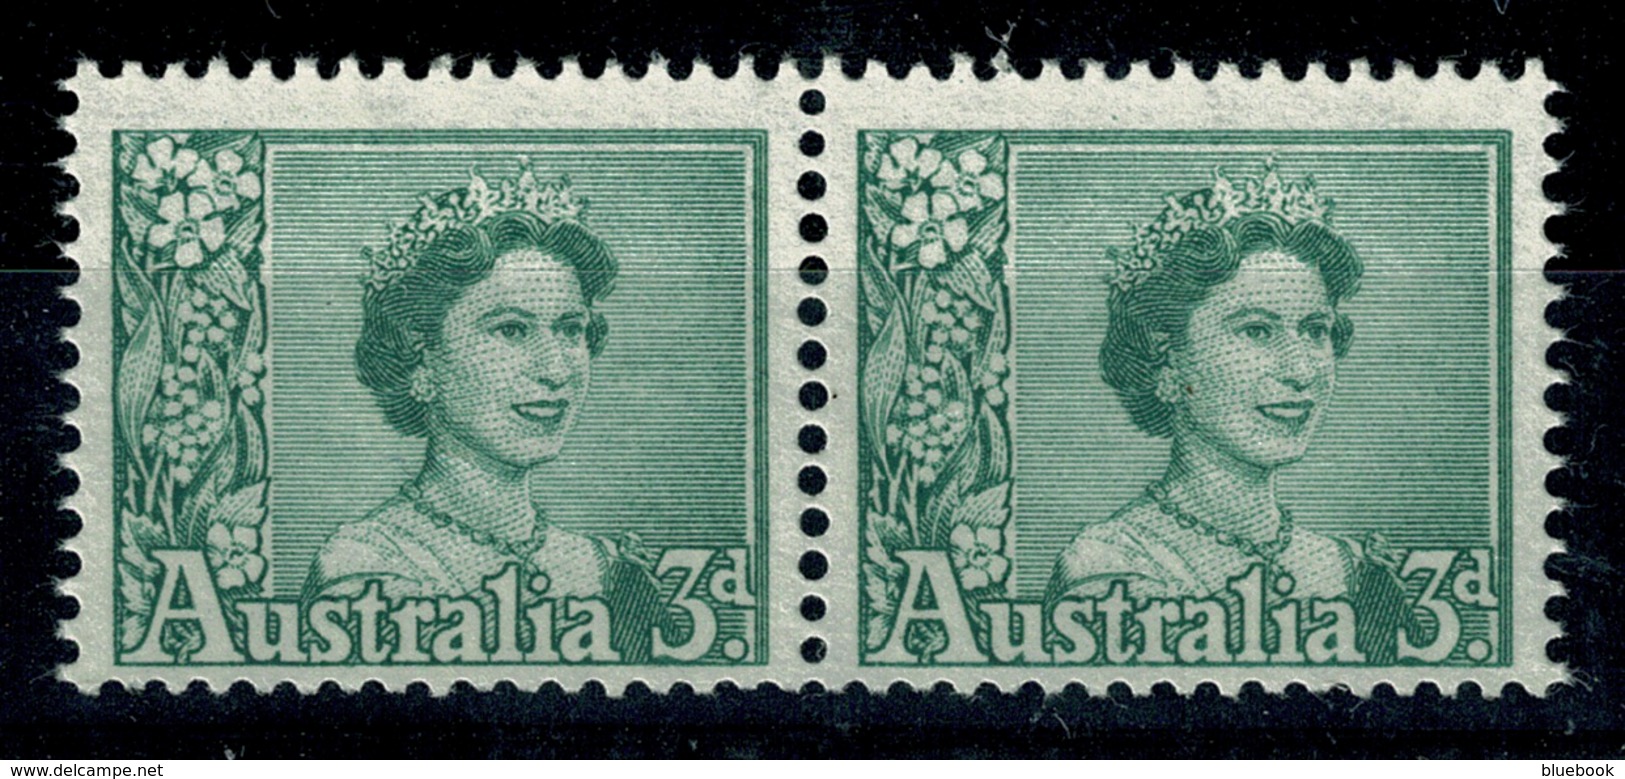 Ref 1236 - 1959 Australia - QEII 3d Coil Pair Stamps MNH - SG 311a - Ungebraucht